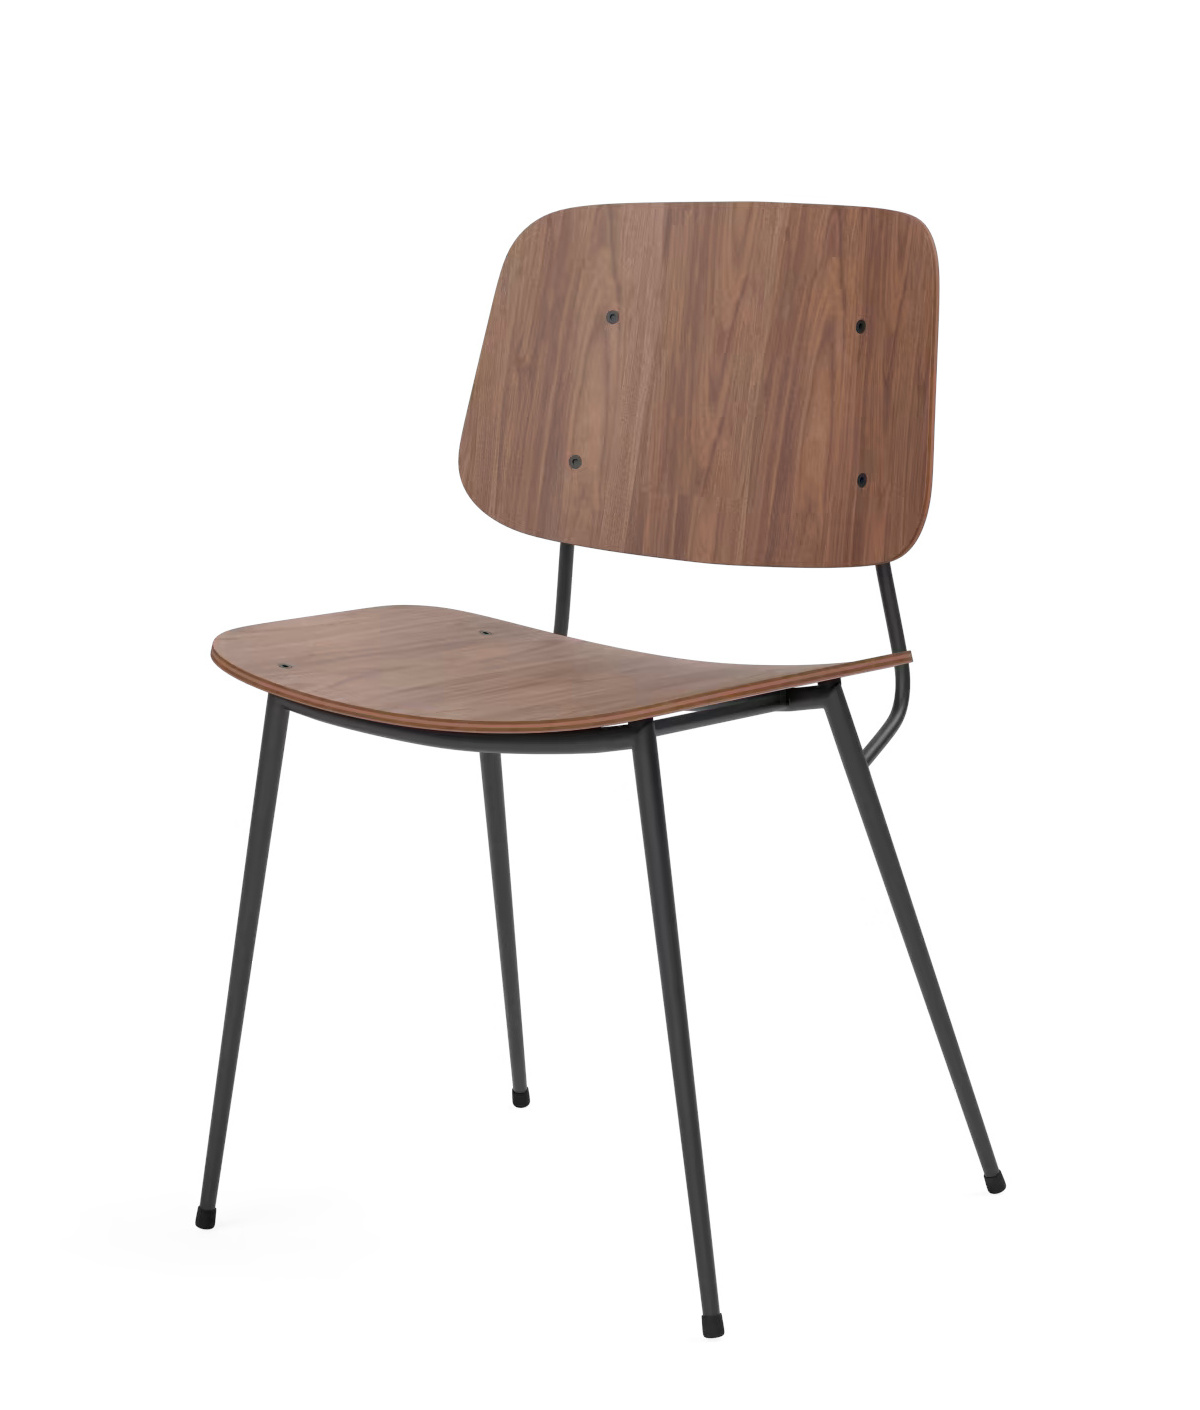 Søborg Metal Base Stuhl, schwarz / eiche lackiert